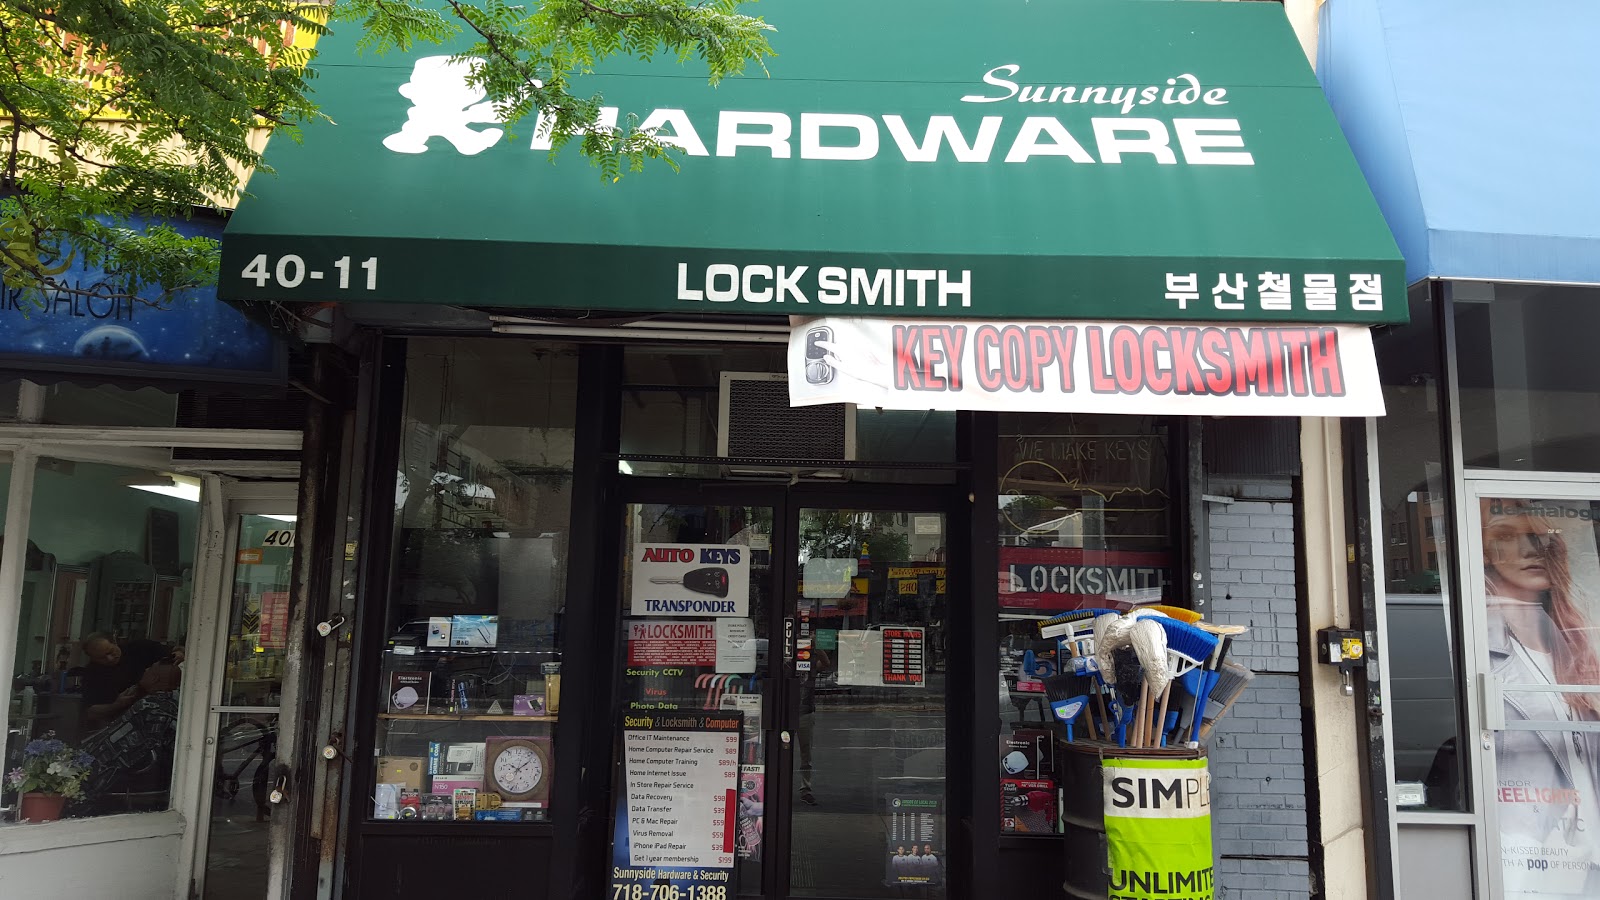 Photo of Sunnyside Hardware in sunnyside City, New York, United States - 1 Picture of Point of interest, Establishment, Store, Hardware store, Locksmith